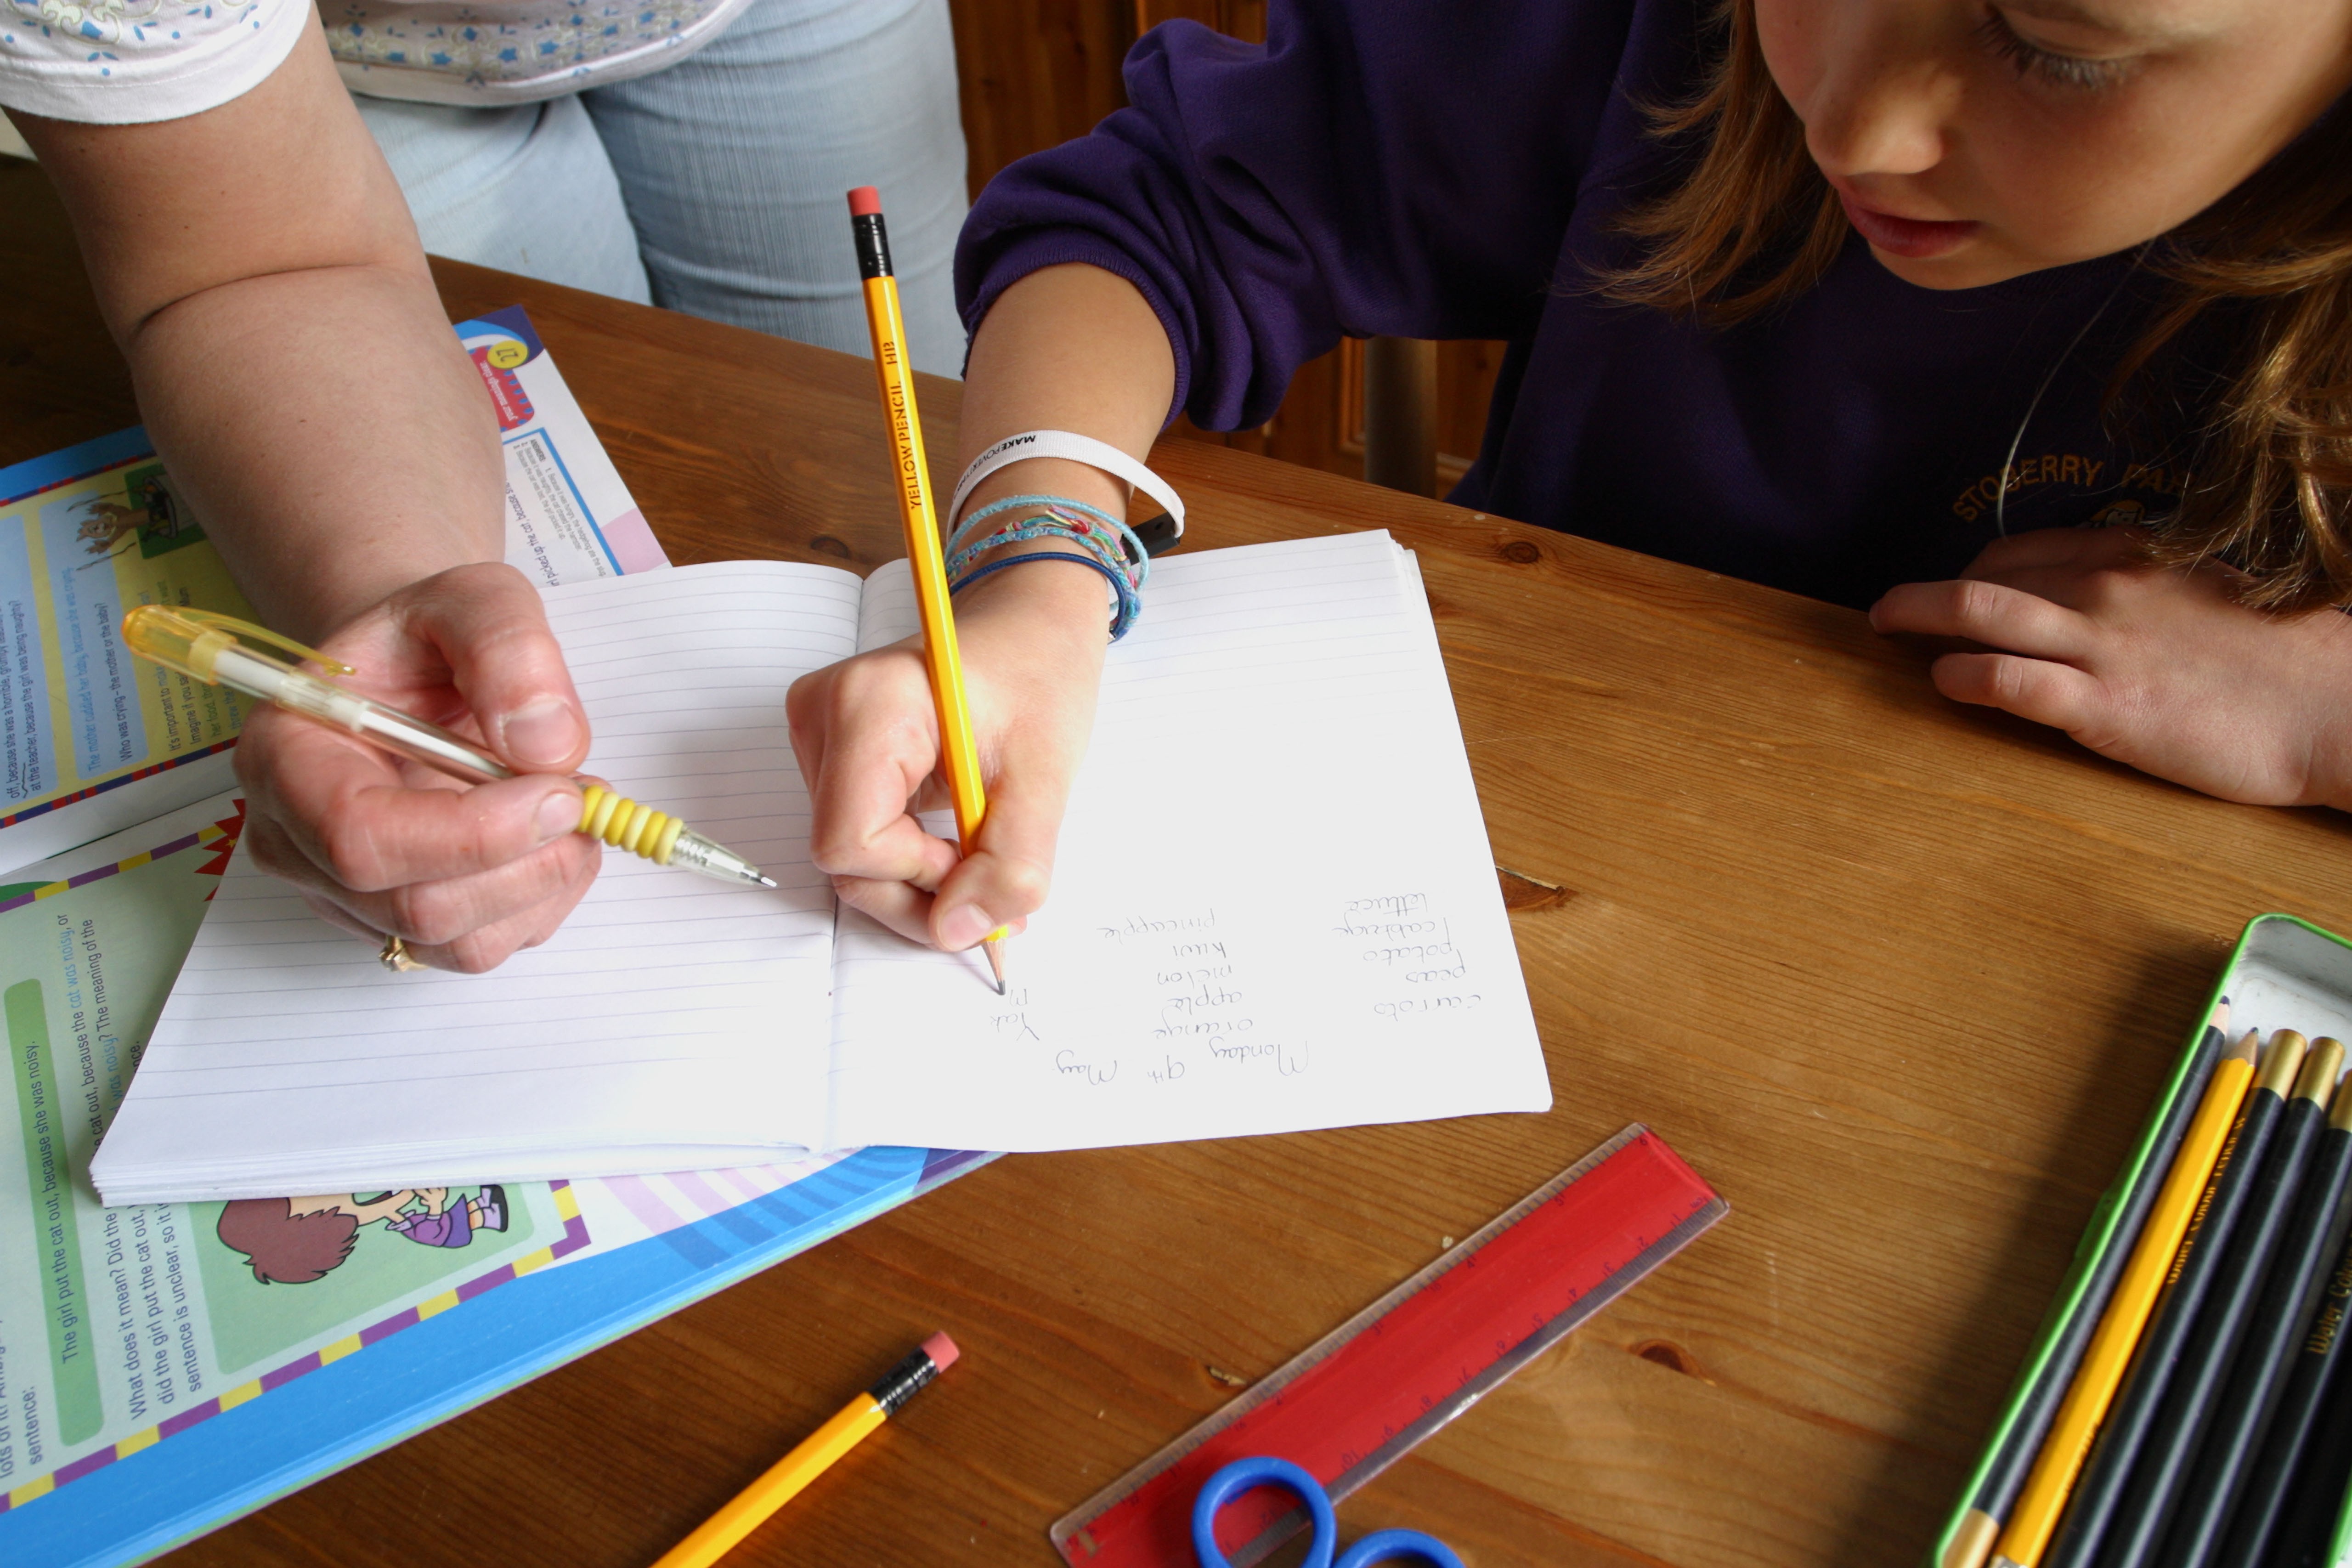 Should children be marking their classmates’ work? Photo: Alamy